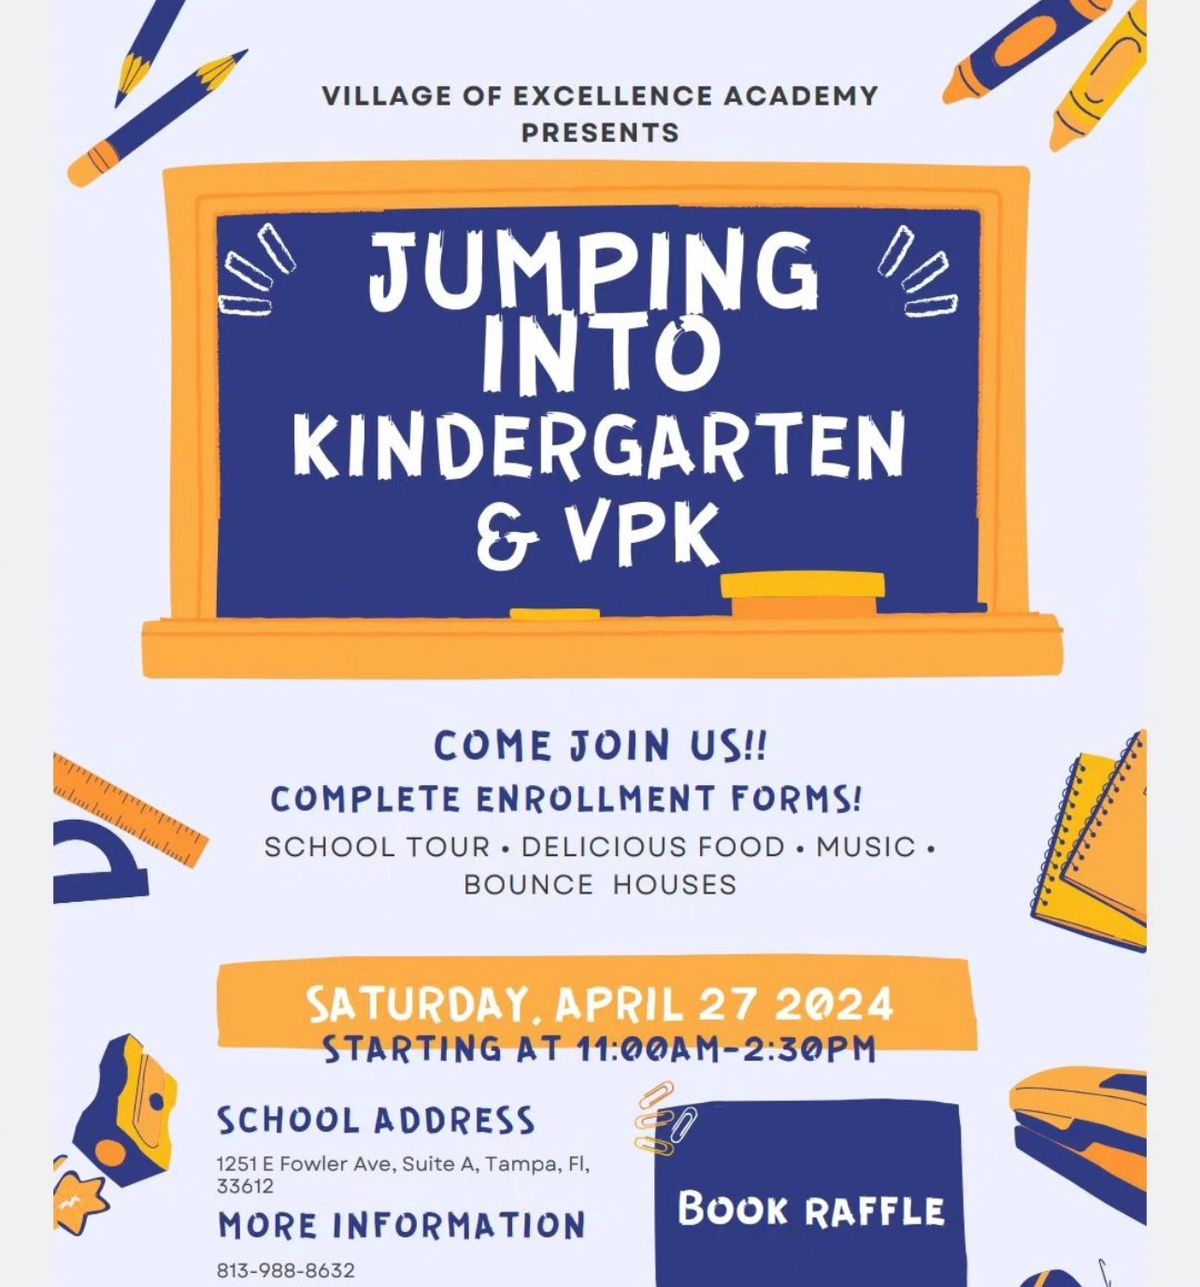 Jumping Into VPK & Kindergarten